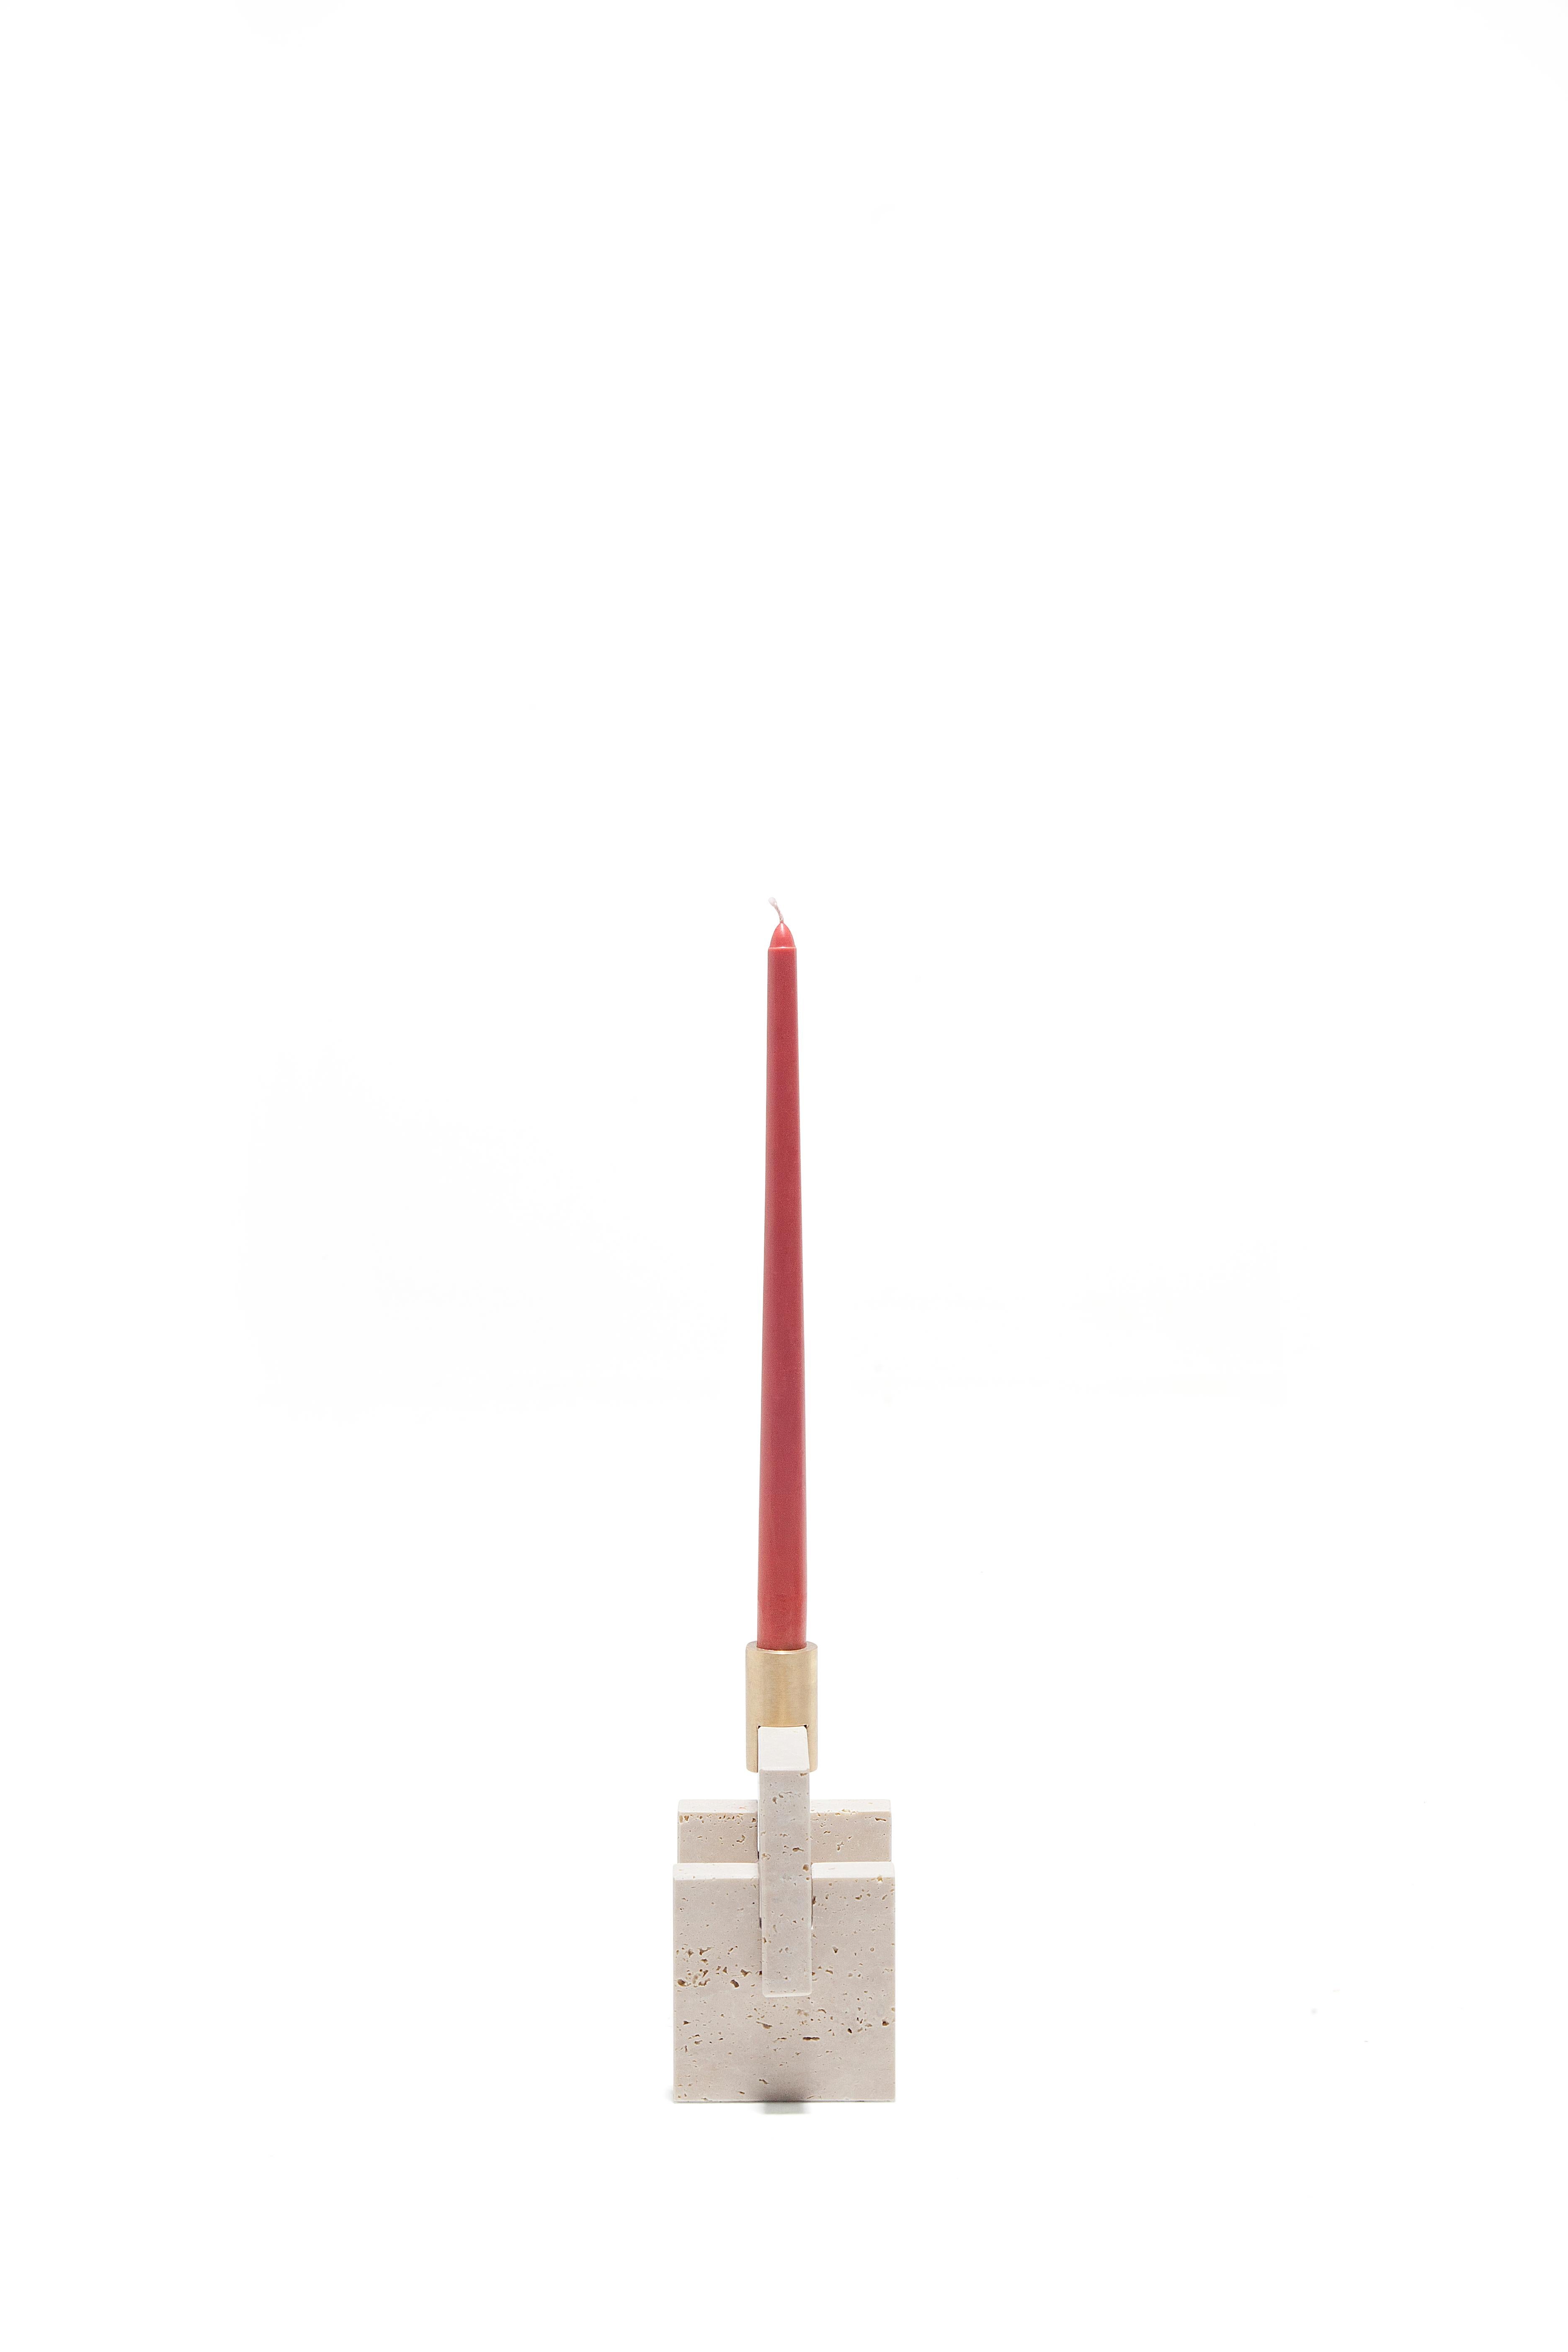 Modern Fit Candle by Joseph Vila Capdevila